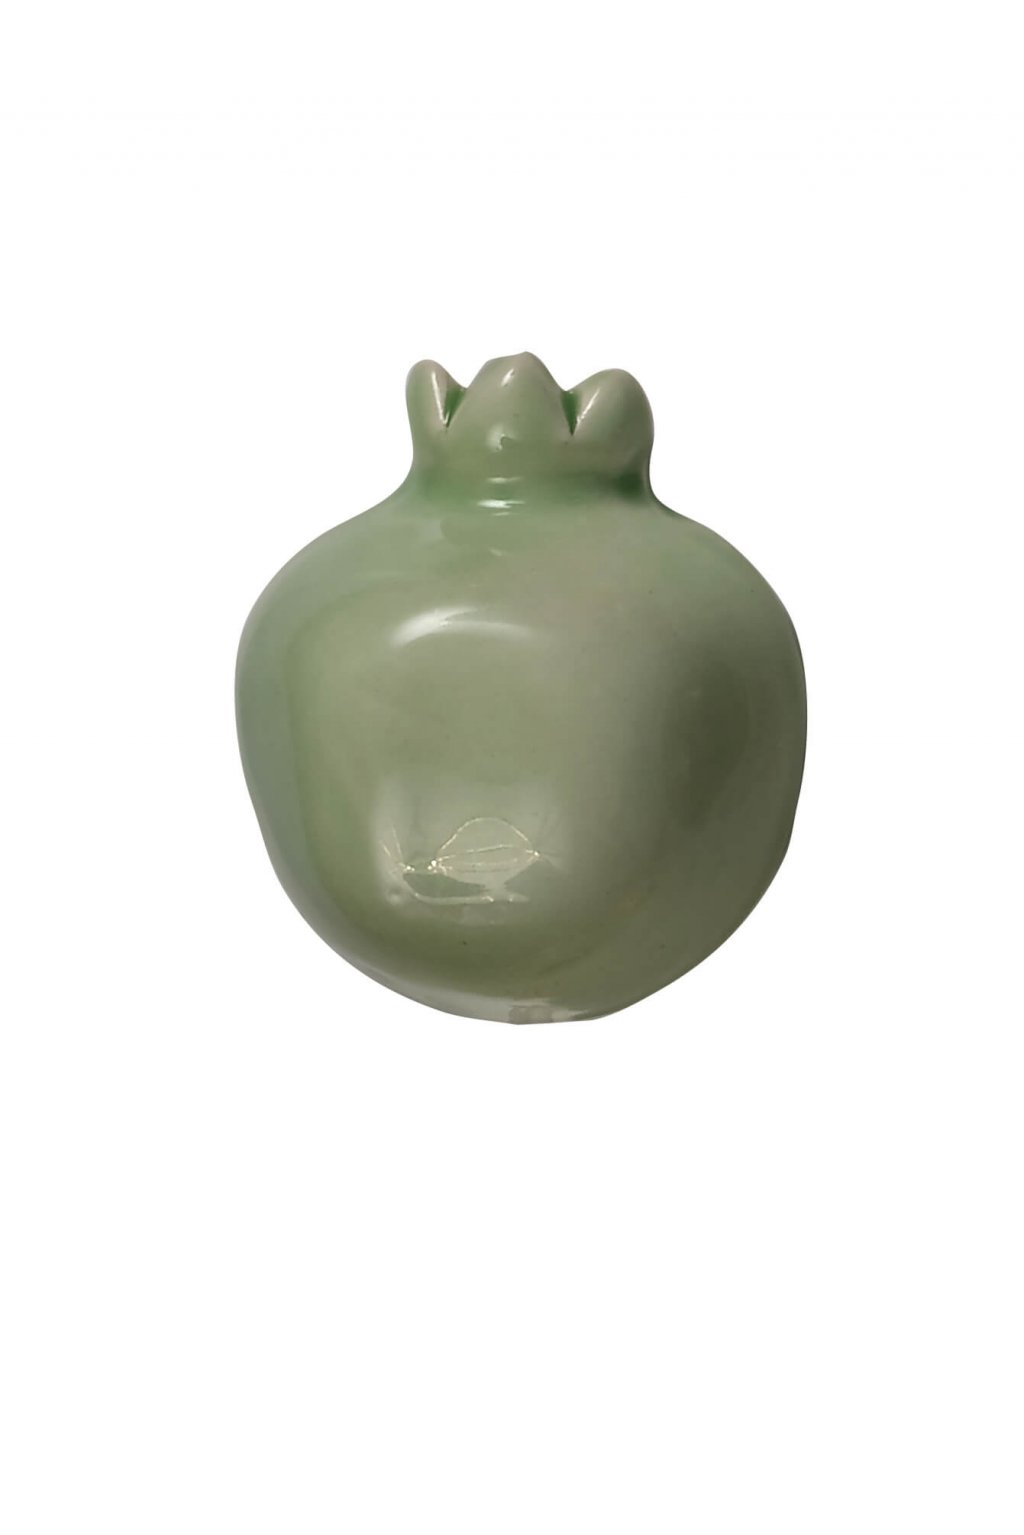 Water Green Glossy Ceramic Glaze (Жидкость)